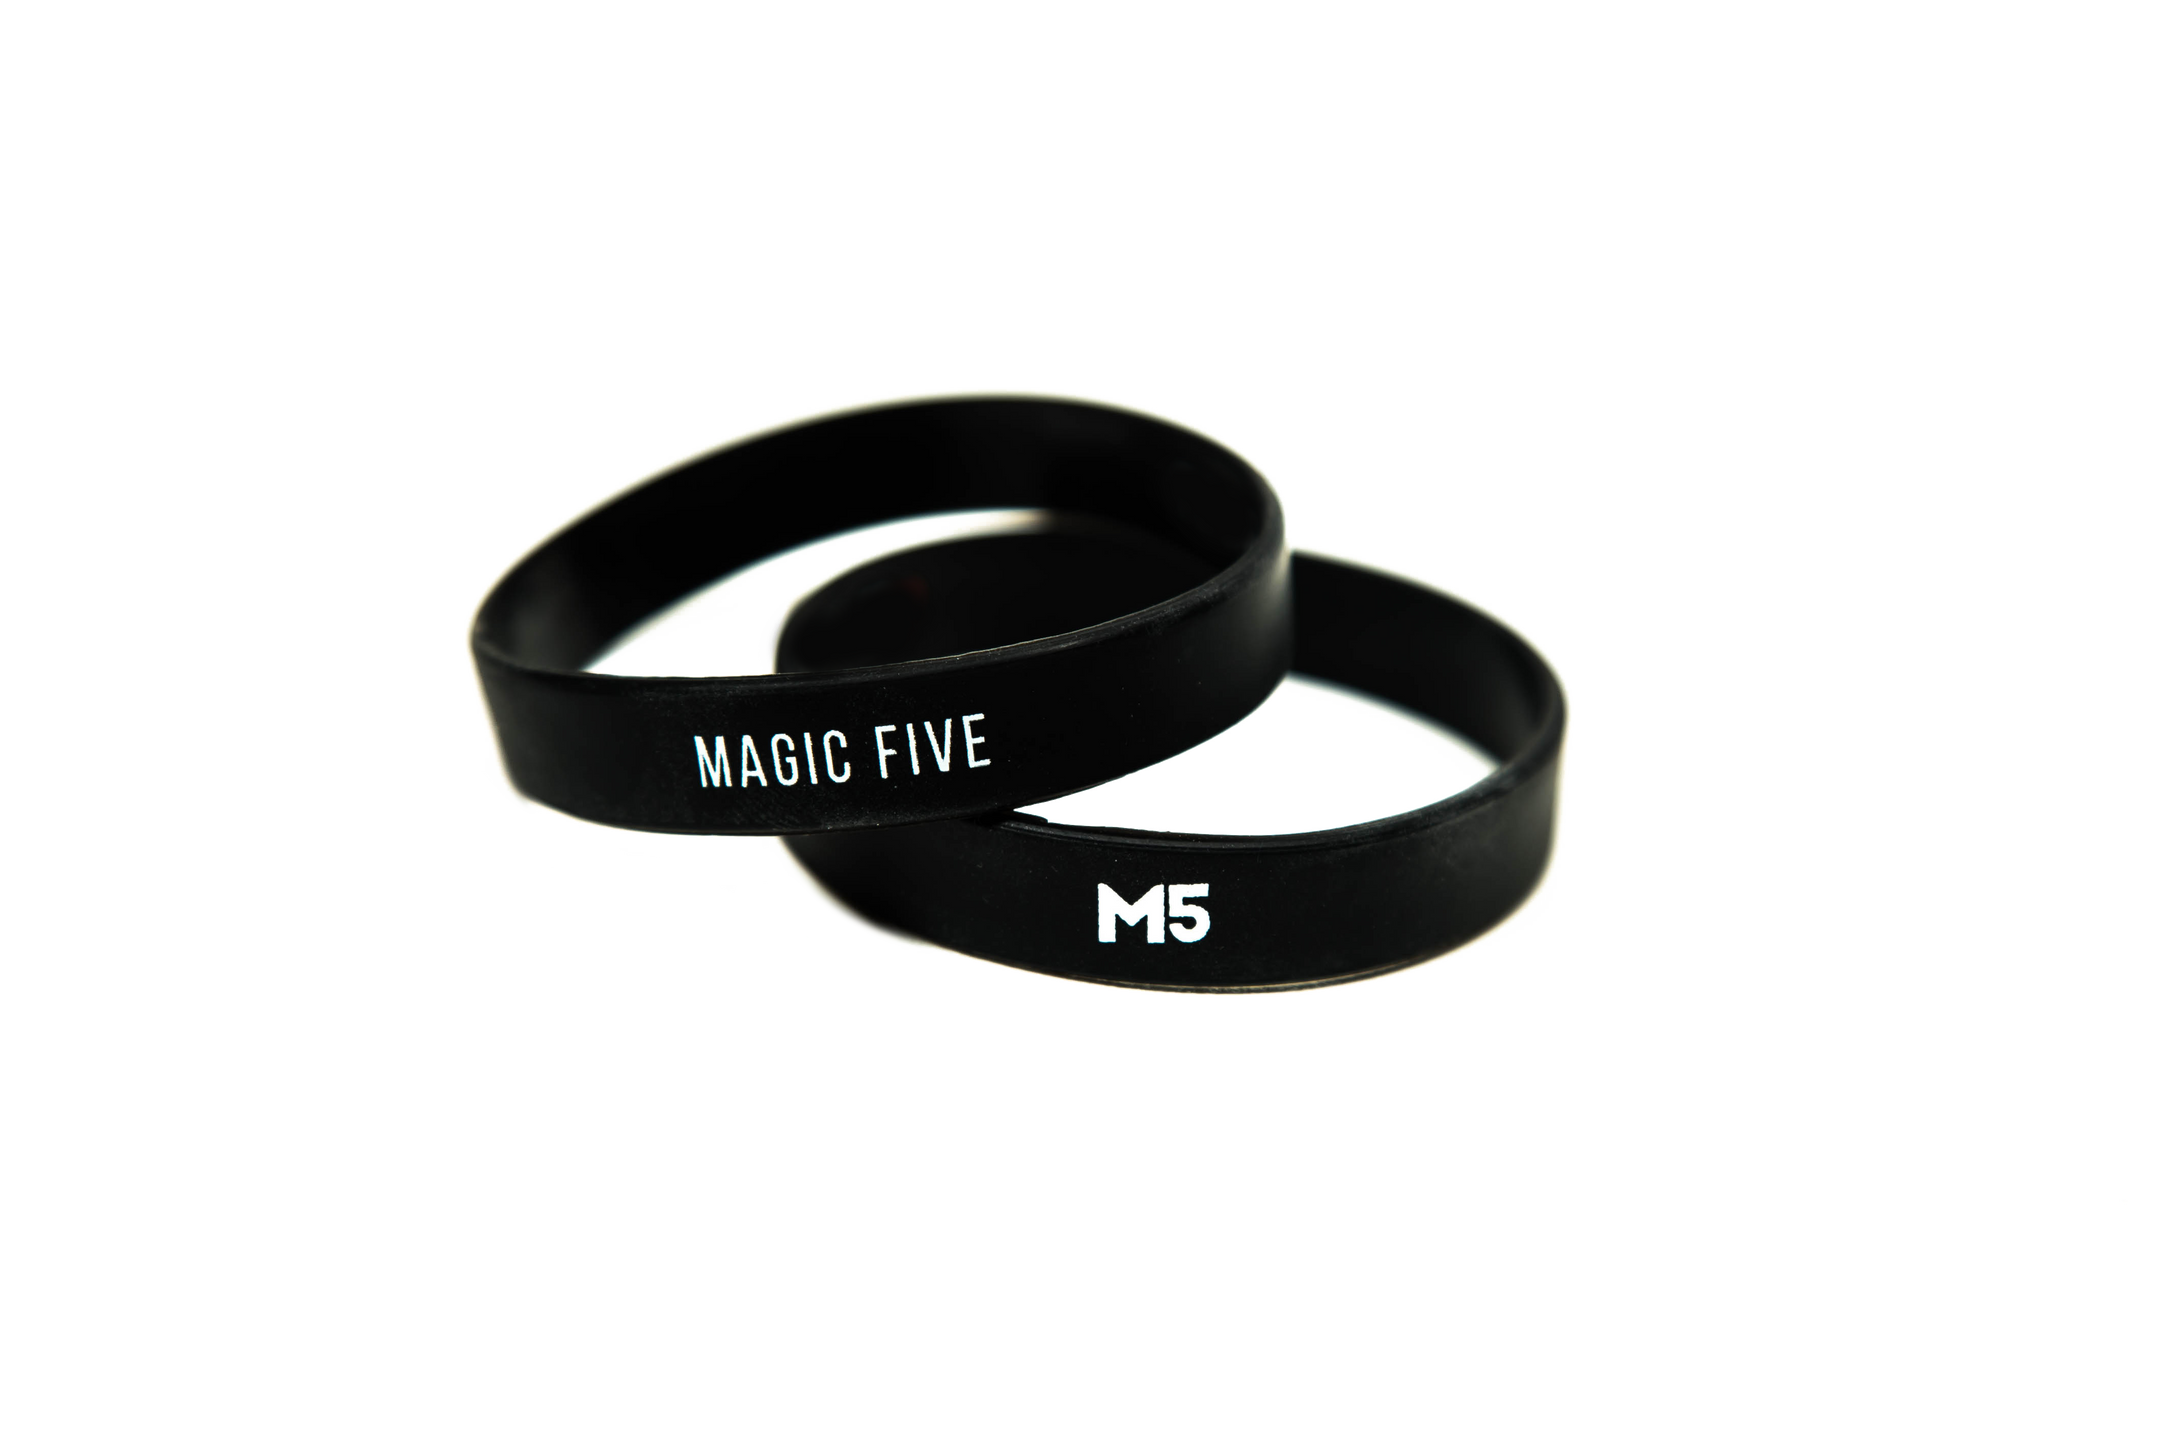 Magic 5s. Мэджик 5. Кольцо Мэджик Файв. M5 Мэджик Файв. M5 Magic Five браслет.